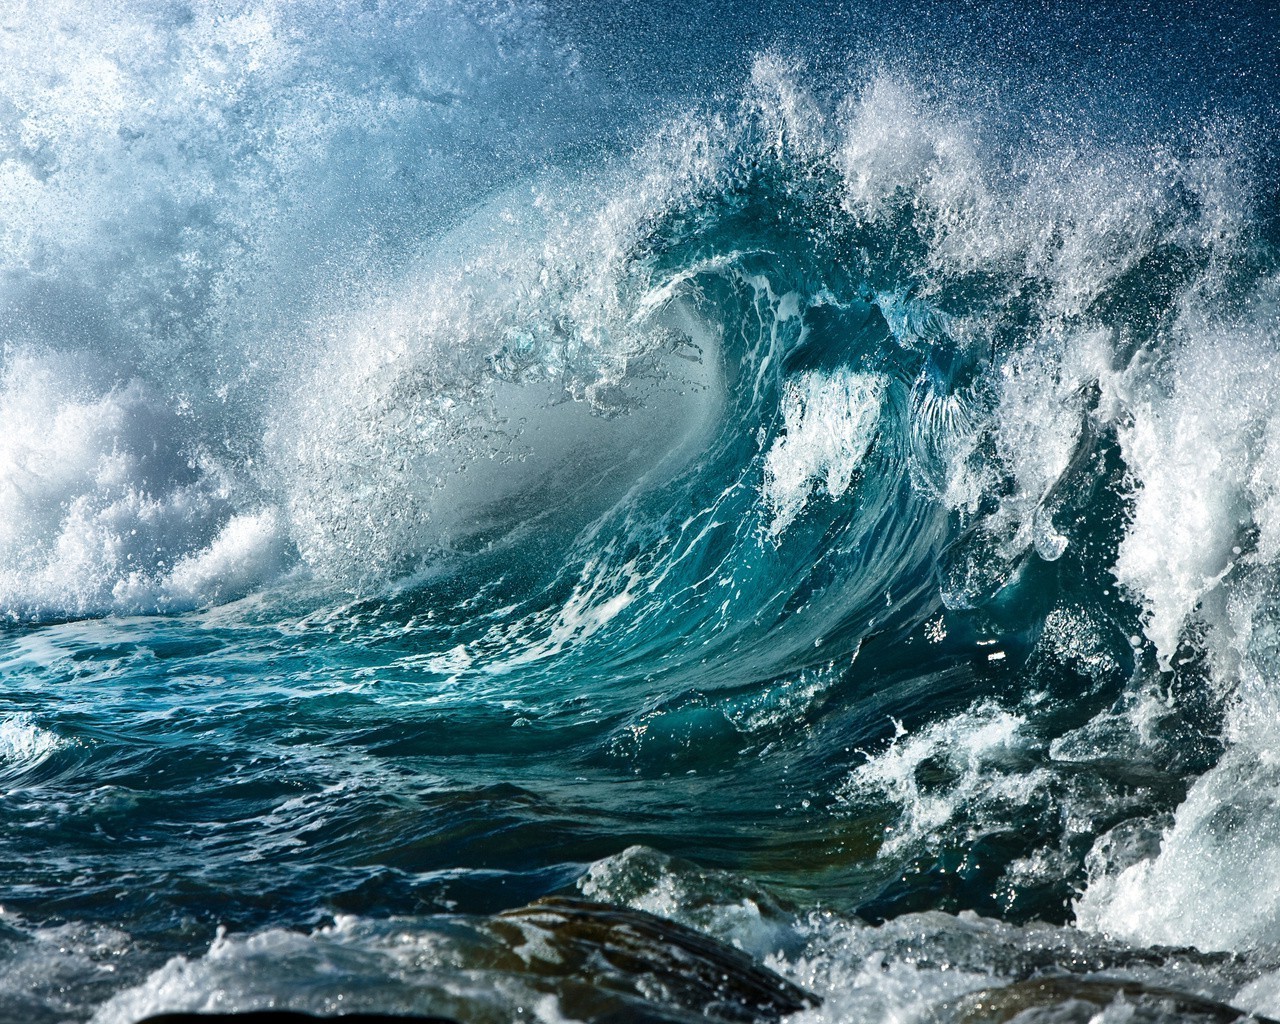 water surf wave ocean spray sea storm swell motion foam action splash crash tsunami outdoors recreation seashore